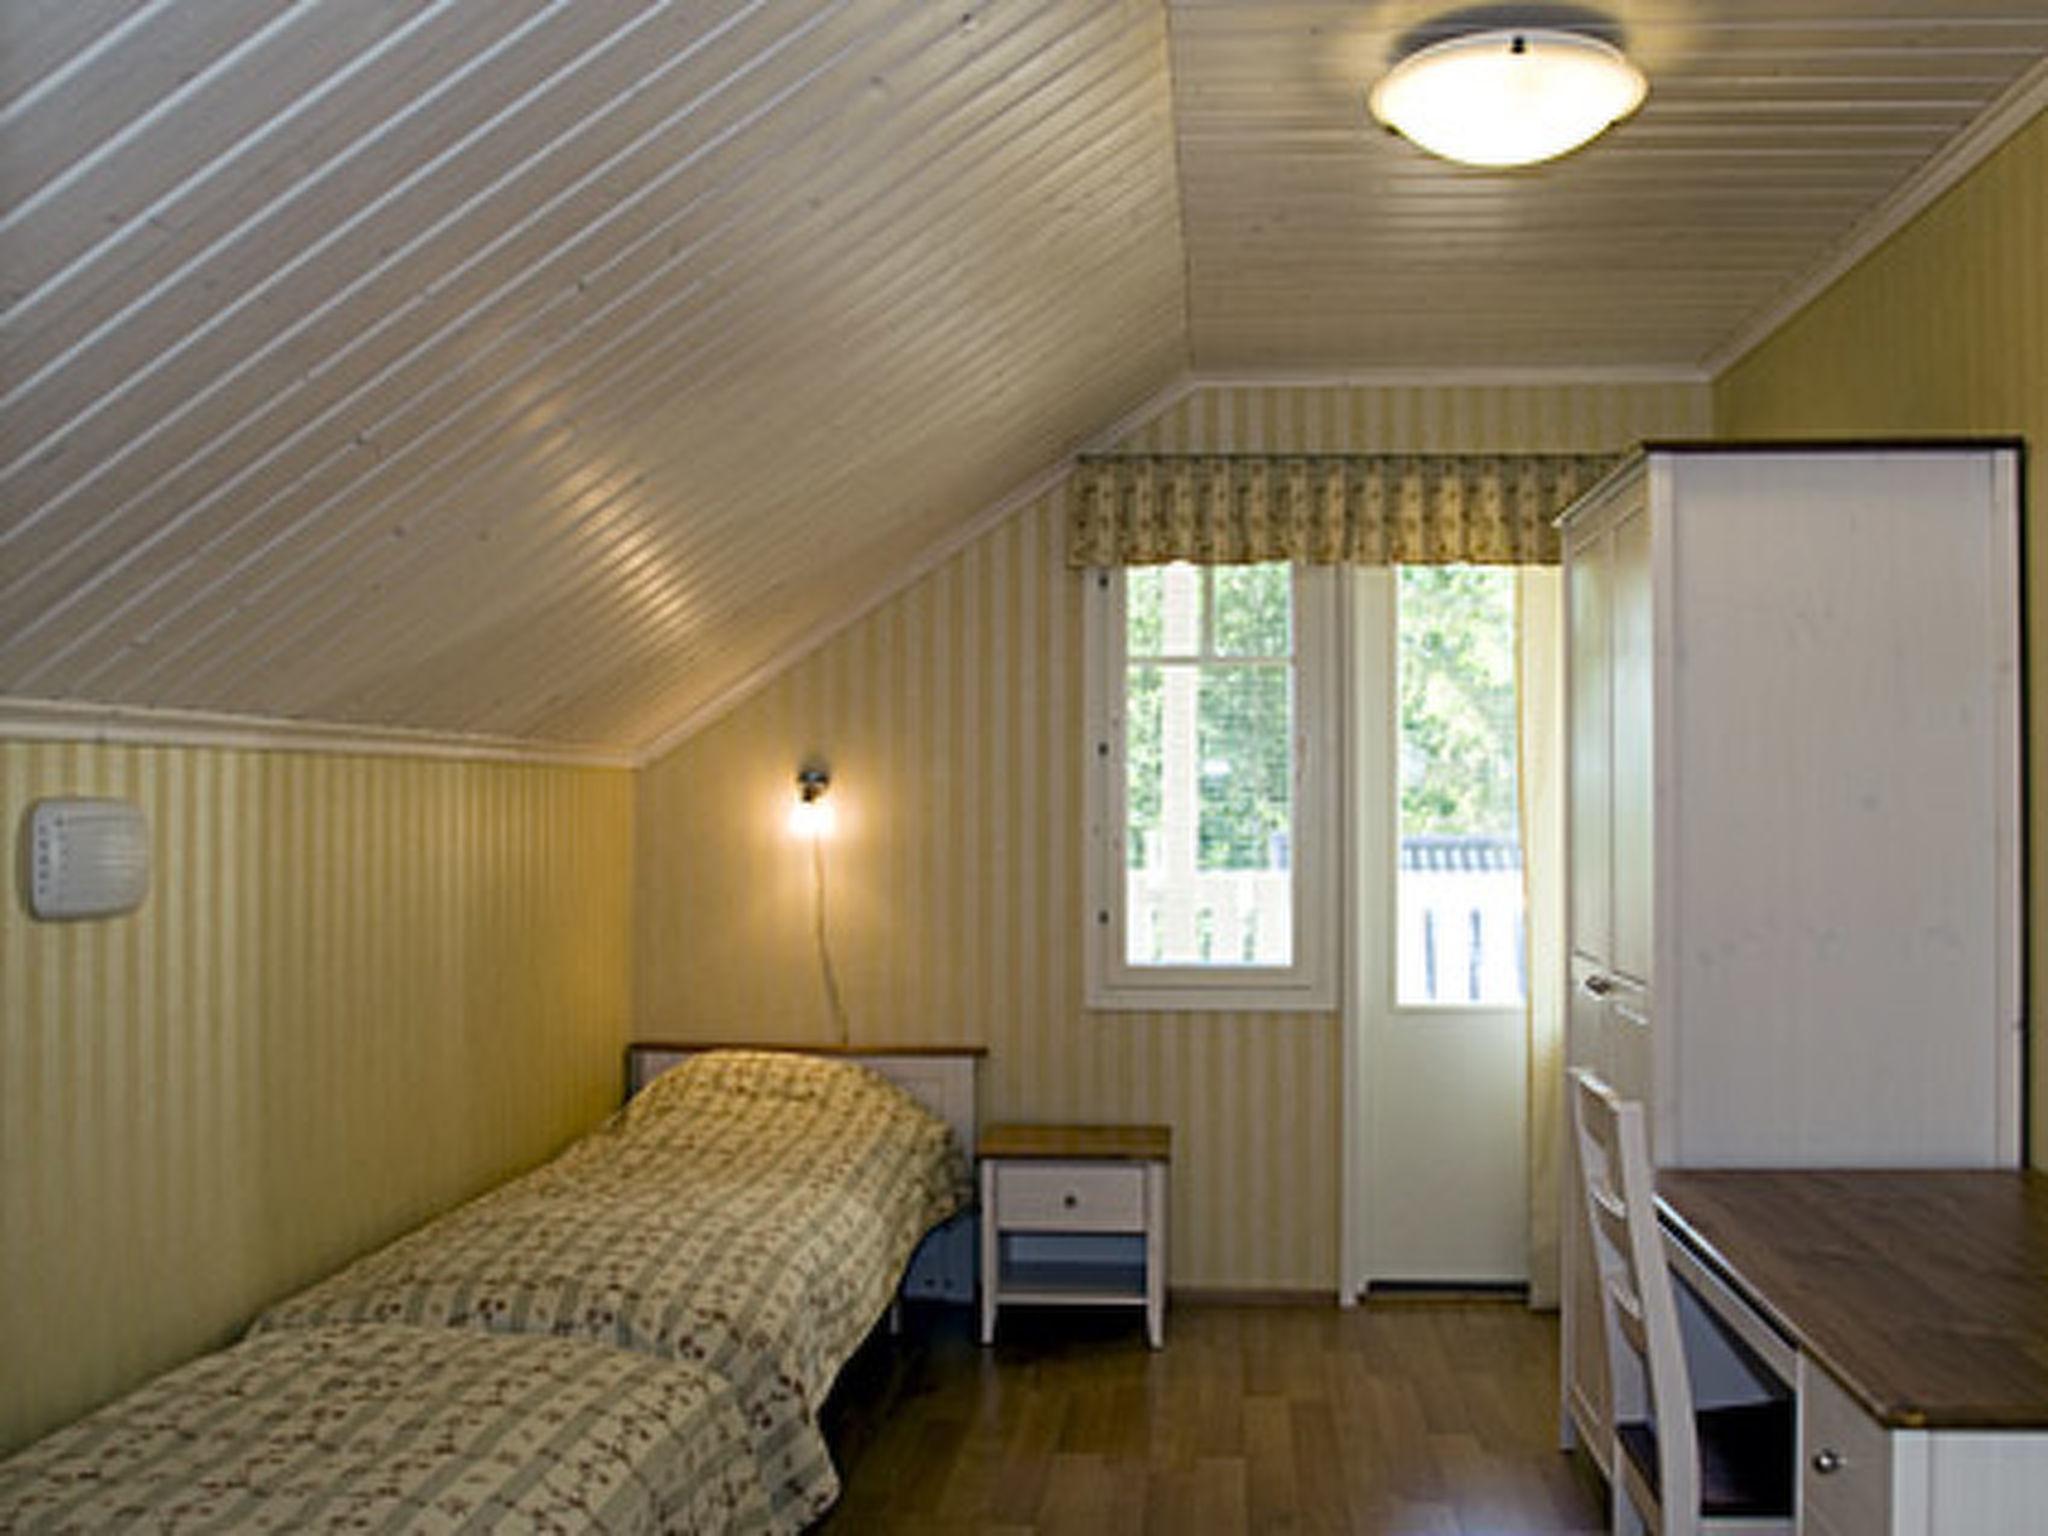 Photo 14 - 4 bedroom House in Kuopio with sauna